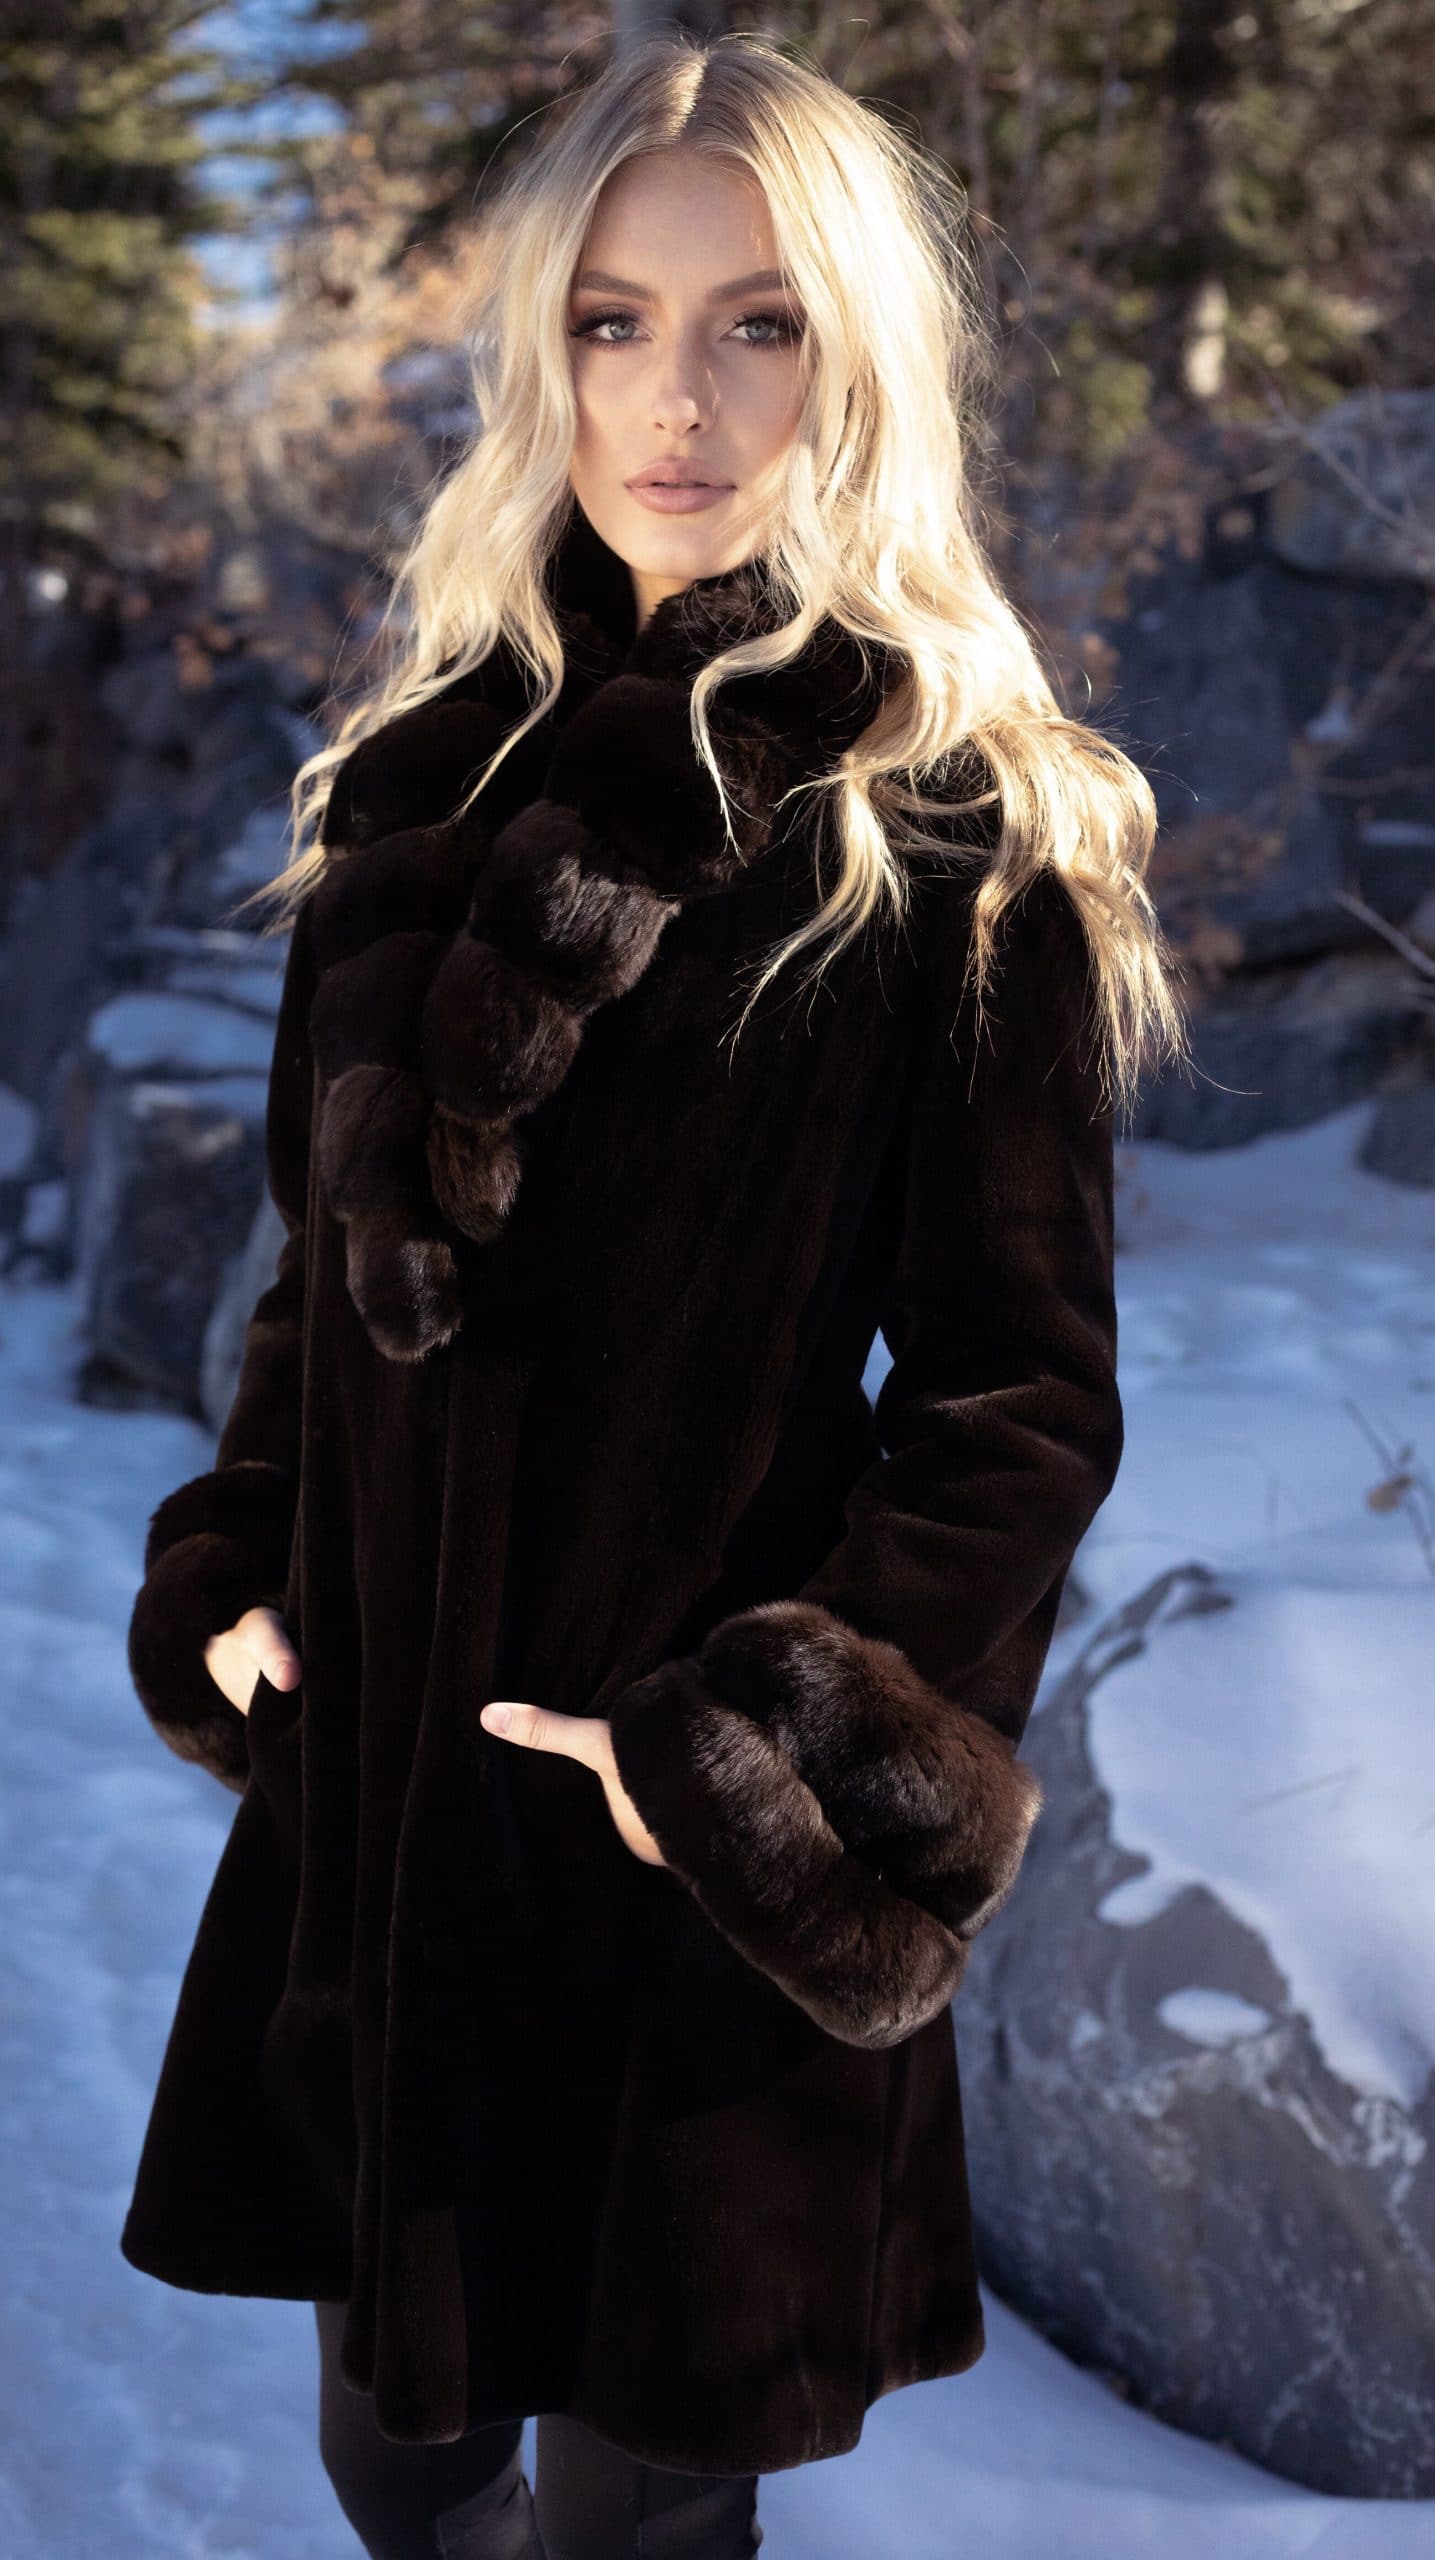 Sheared Sapphire Mink Fur coat with chinchilla collar